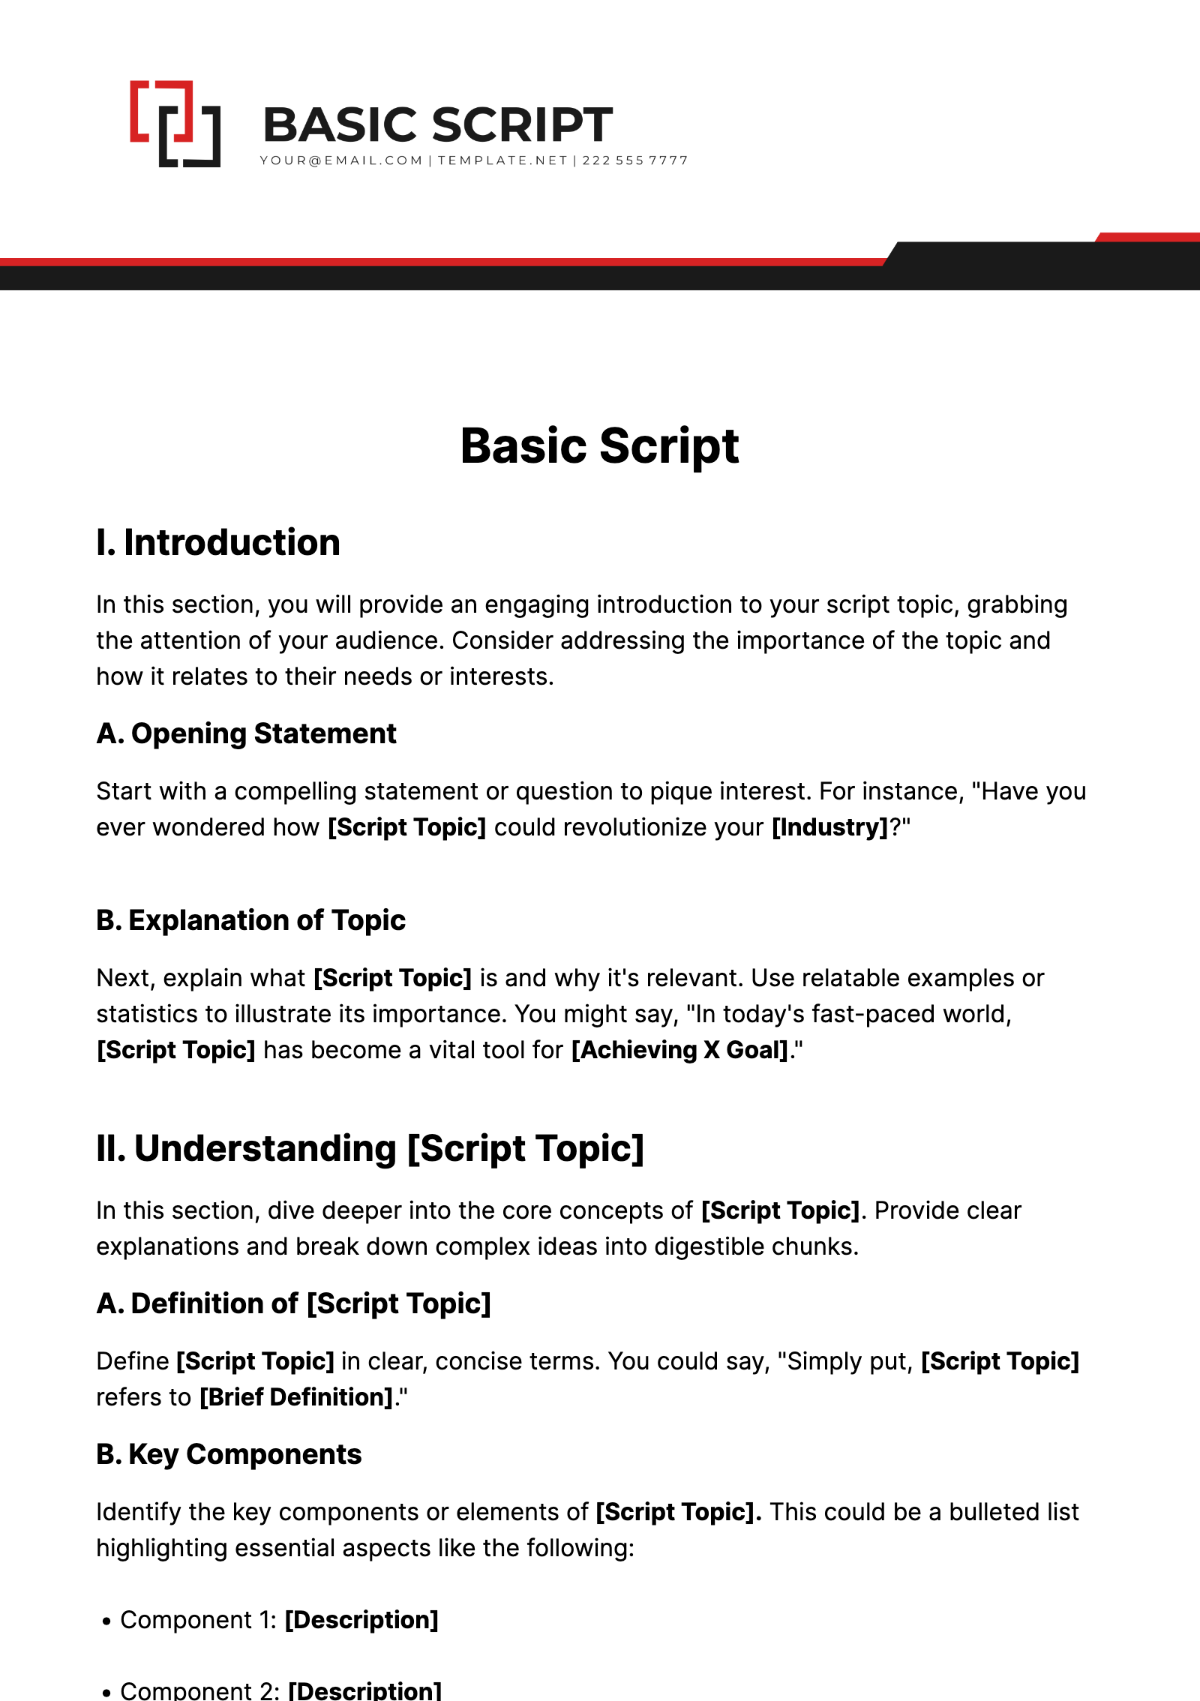 Basic Script Template